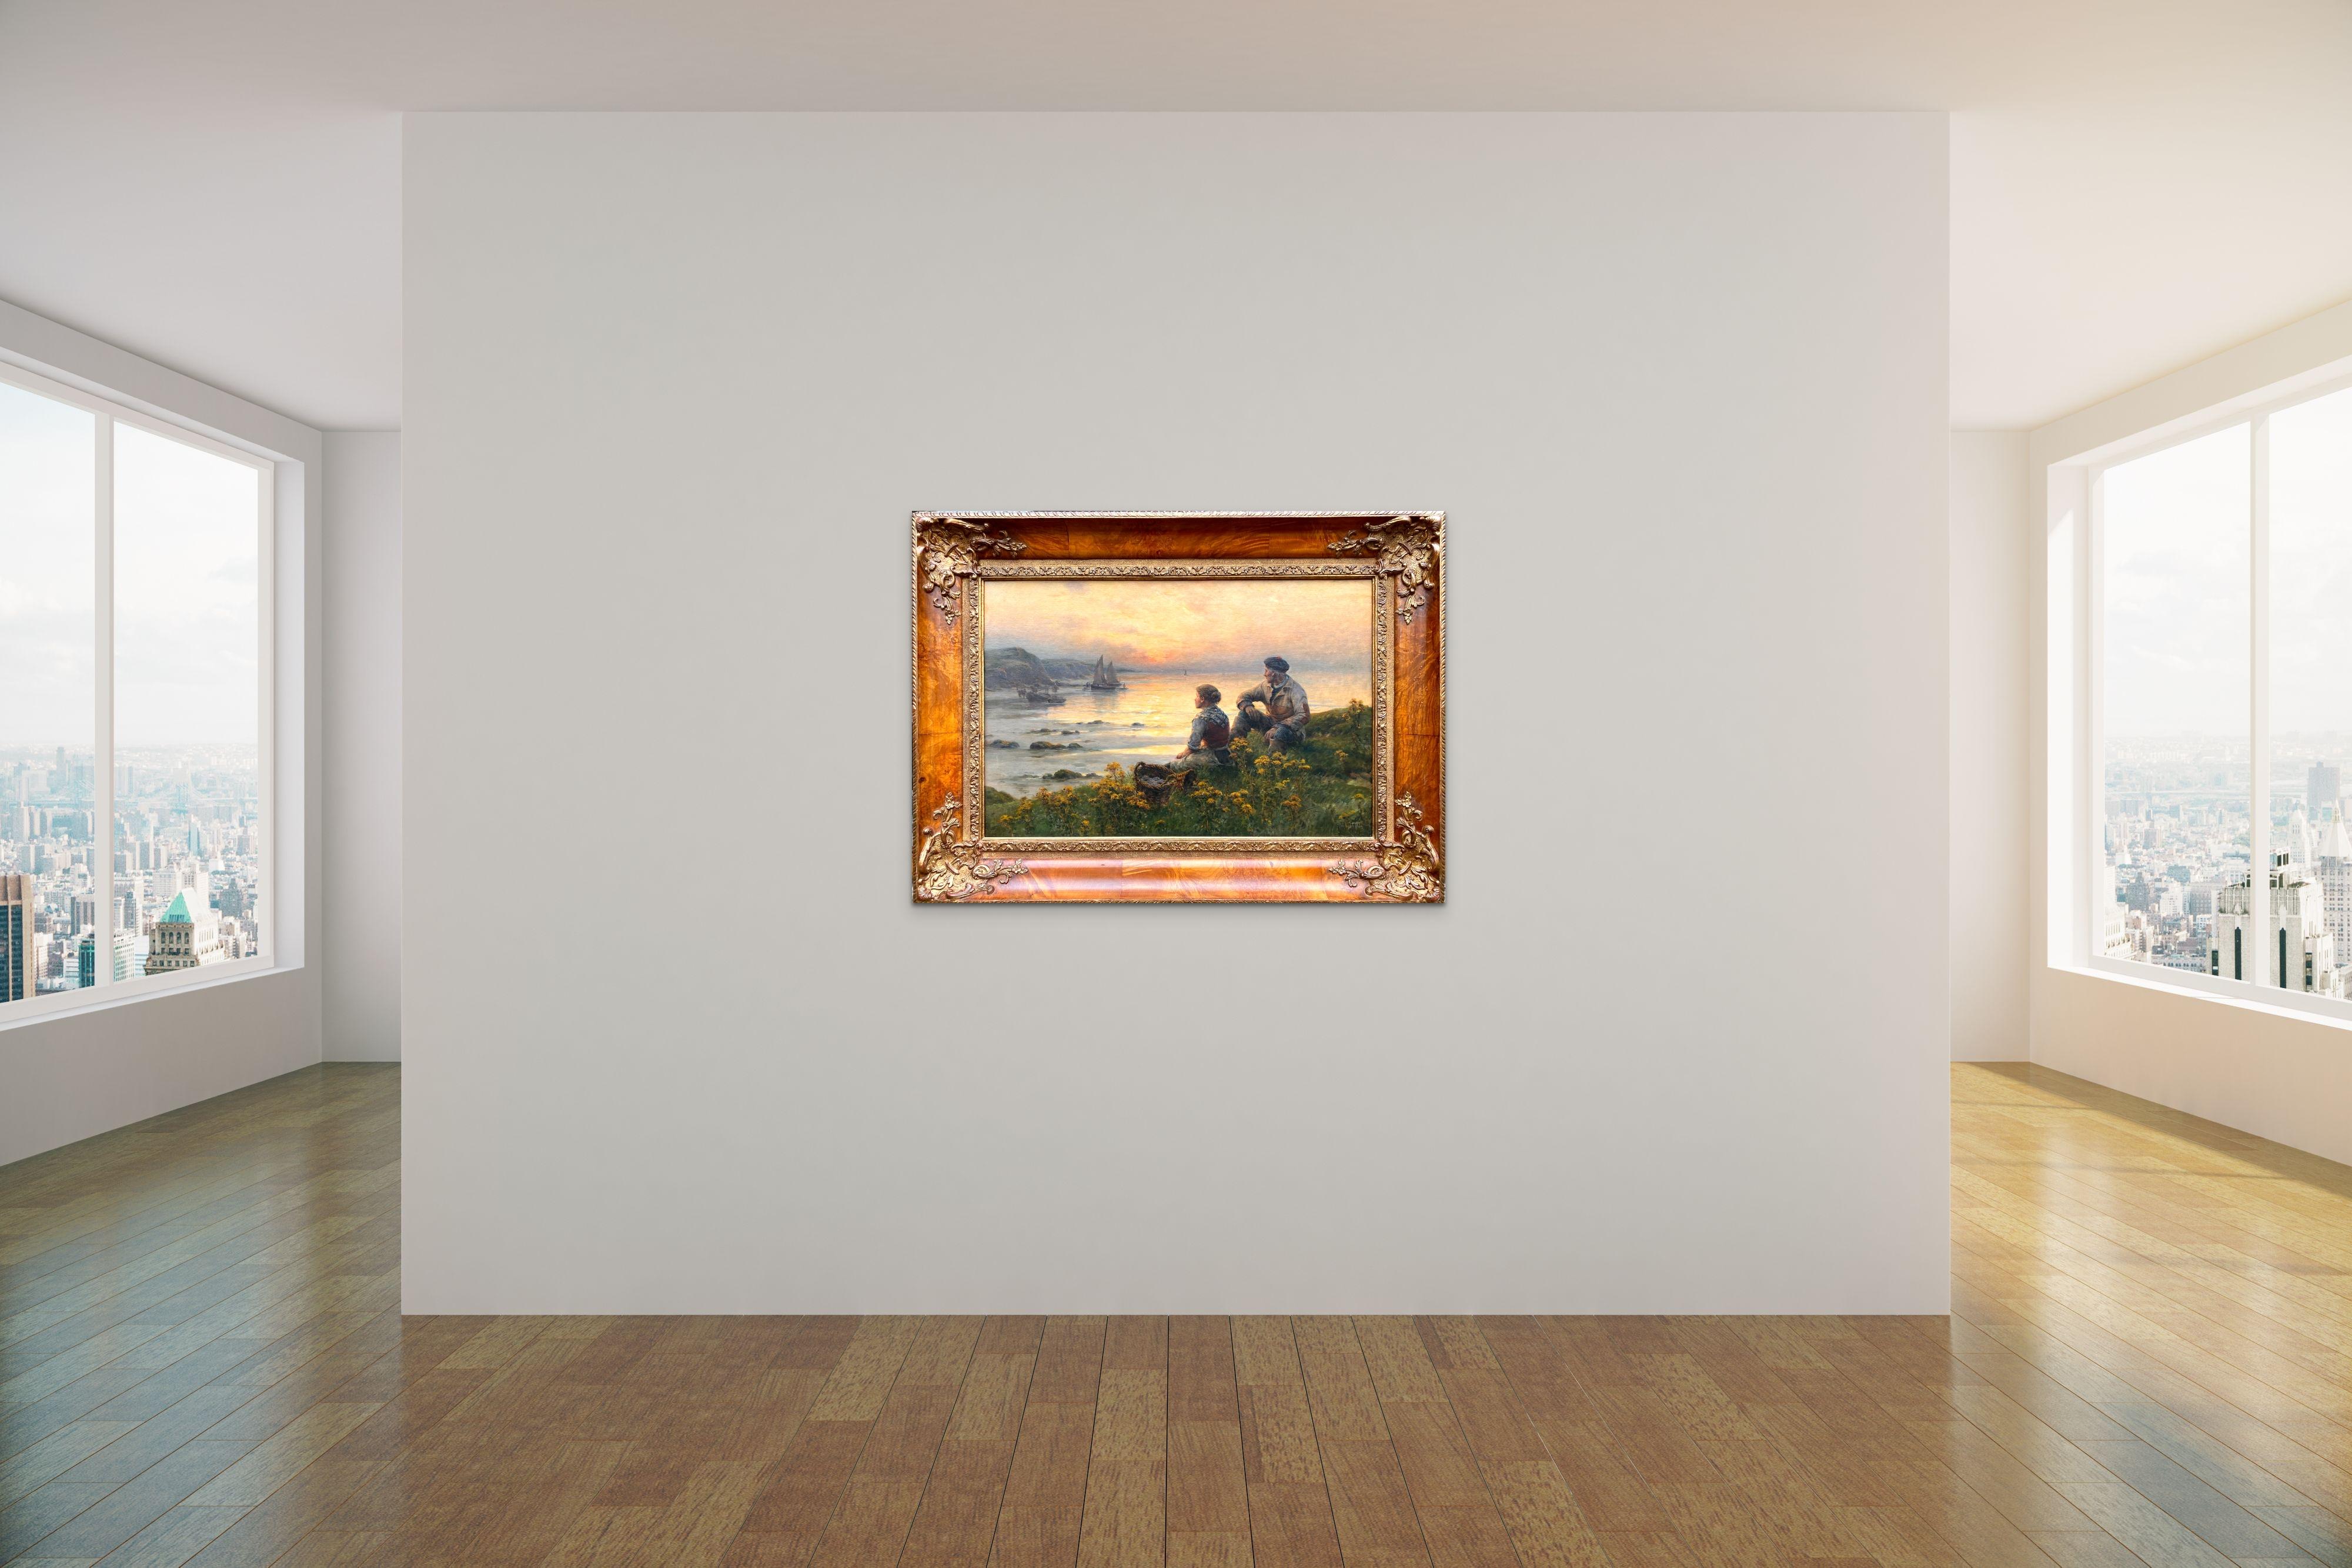 Georges Maroniez
Douai 1865 – 1933 Paris 
French Painter

Sunset
Signature: Signed bottom right
Medium: Oil on canvas
Dimensions: Image size 54,50 x 81,50 cm, frame size 81 x 107 cm

